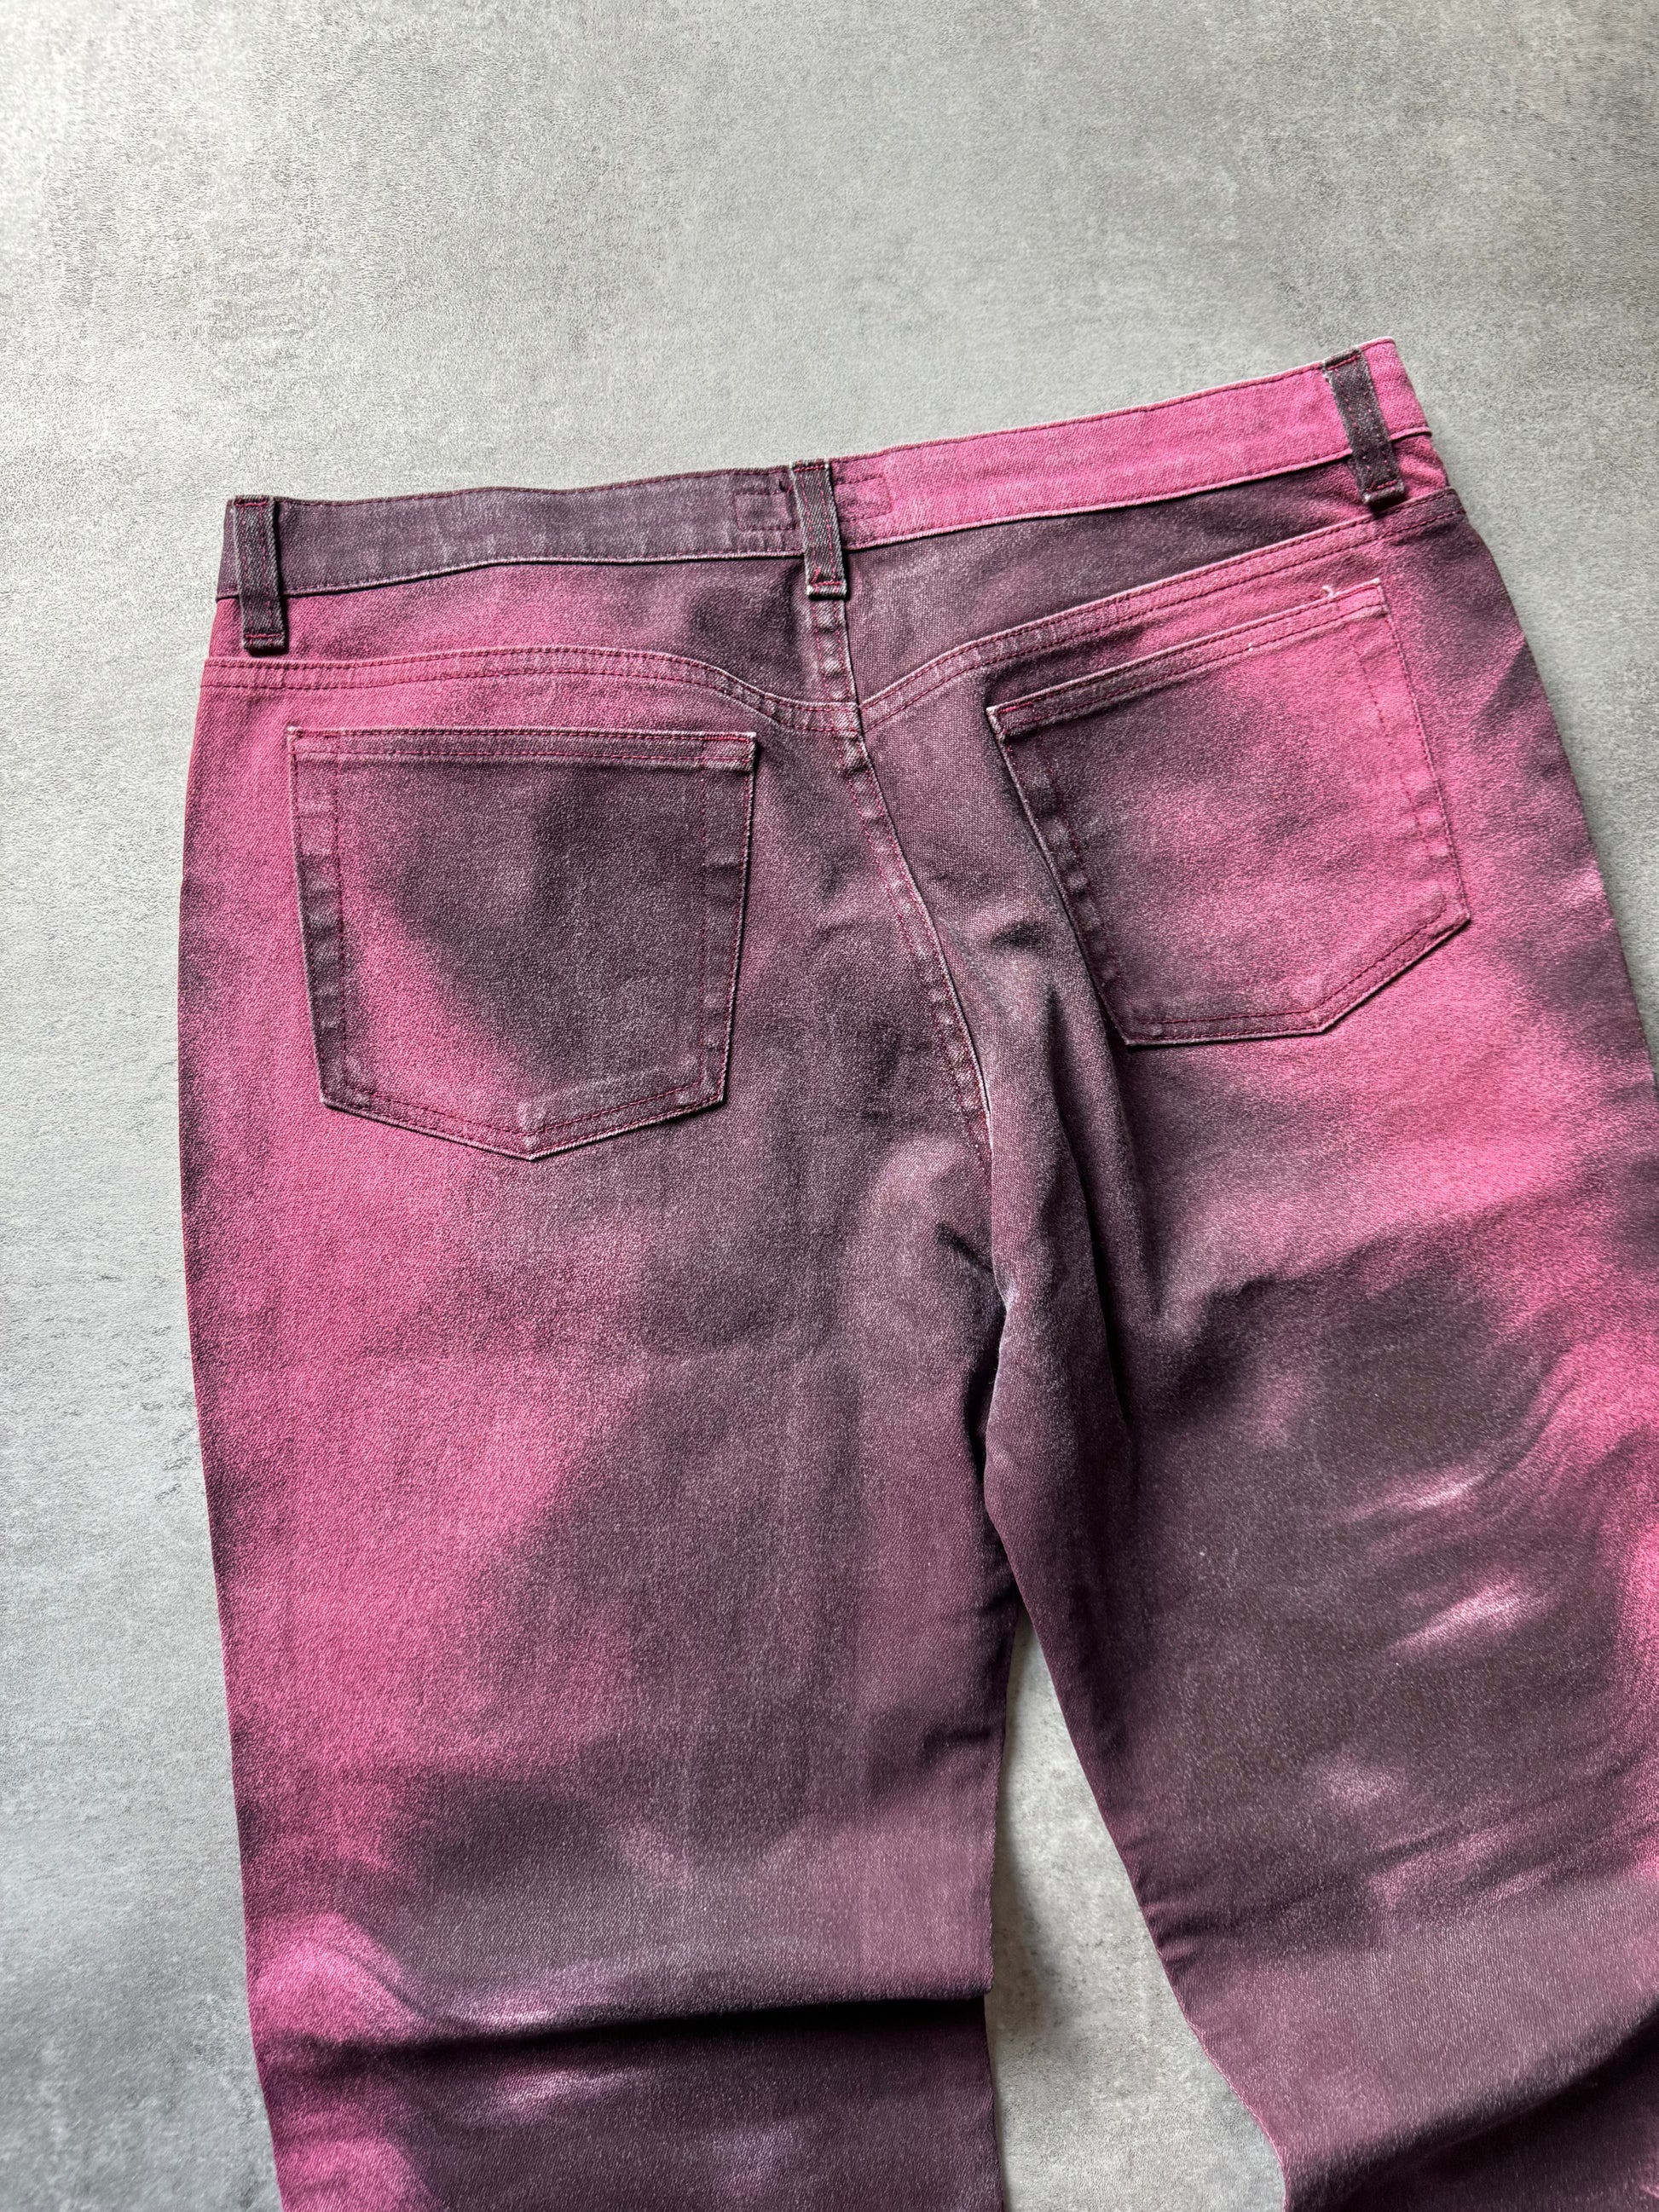 AW2000 Roberto Cavalli Floral Purple Spectrum Pants (L) - 4